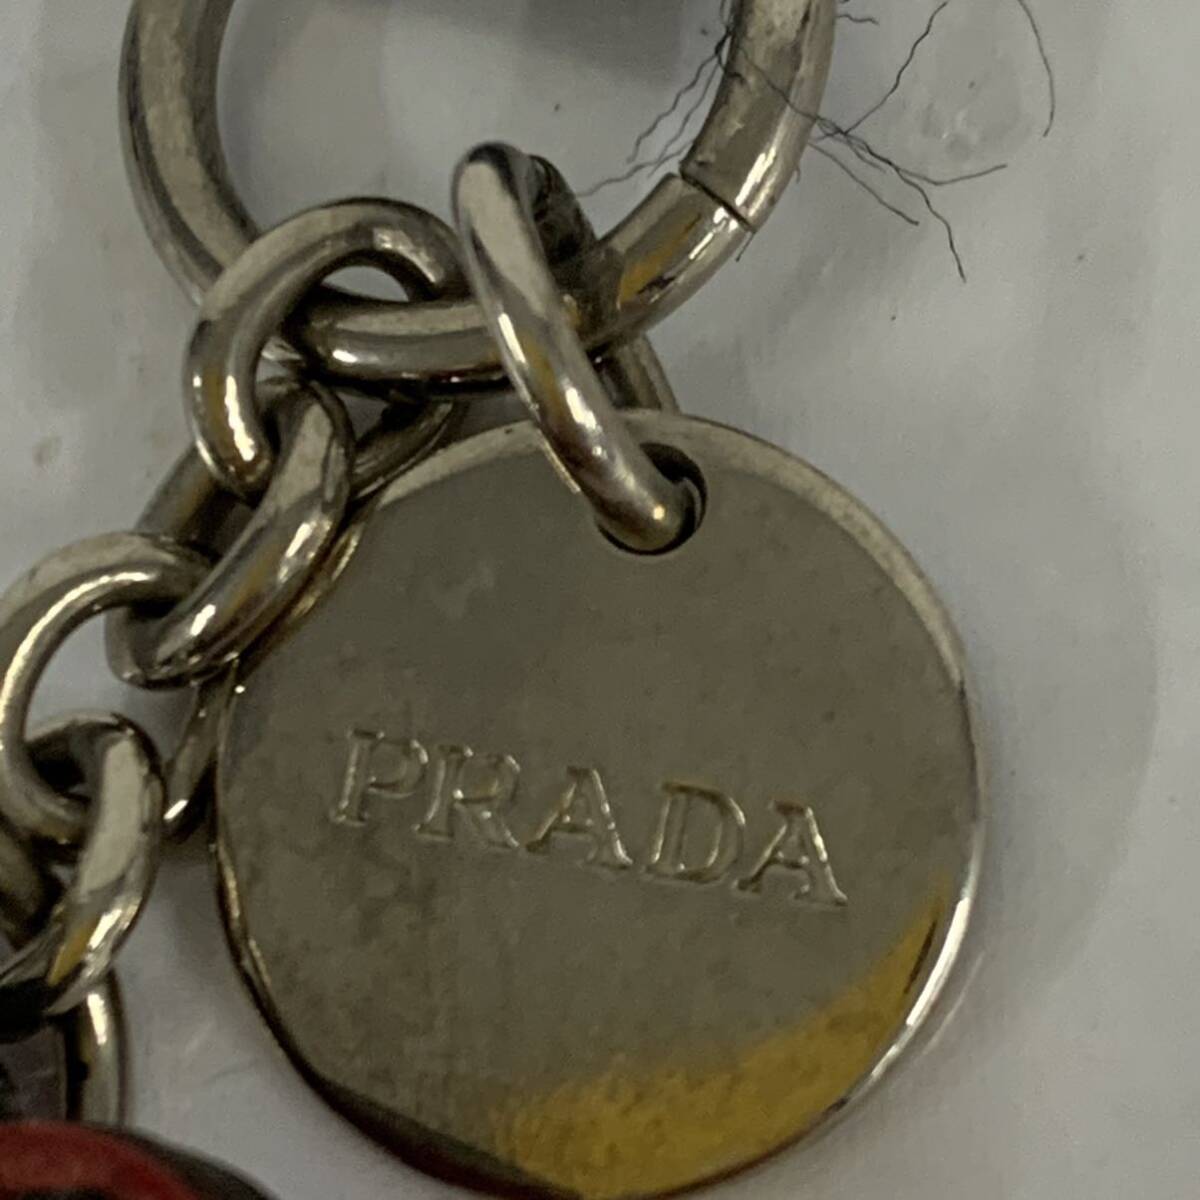  with translation PRADA Prada Heart key holder charm strap lady's present condition goods total length approximately 9cmka4